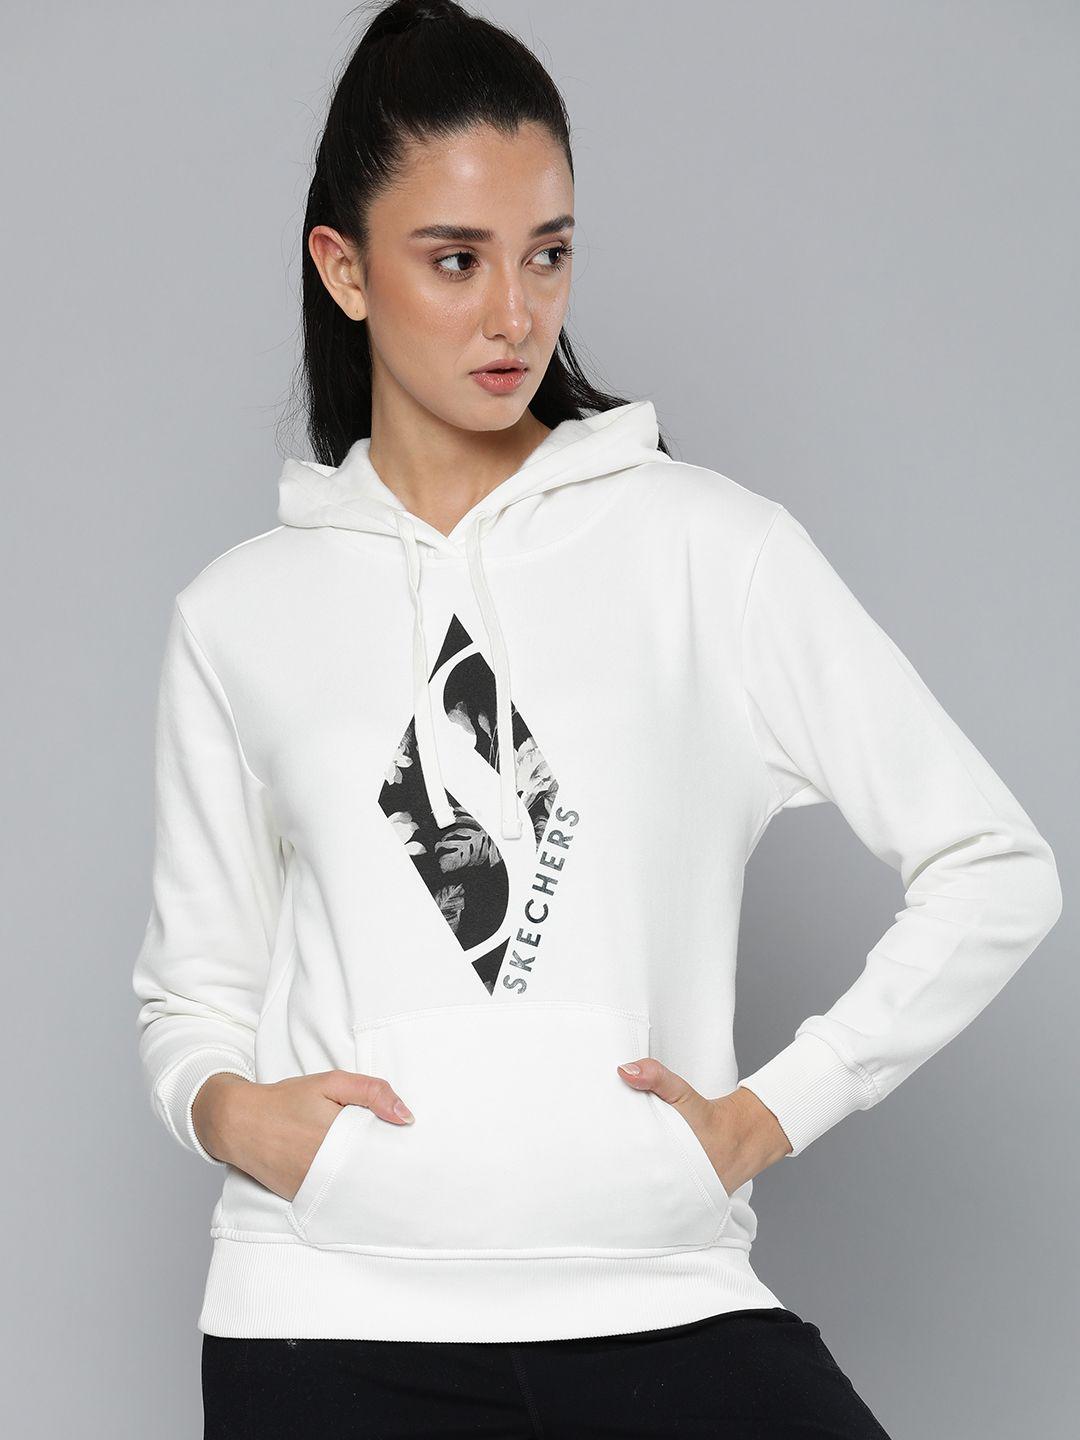 skechers women magnolia dreams po printed hooded sweatshirt